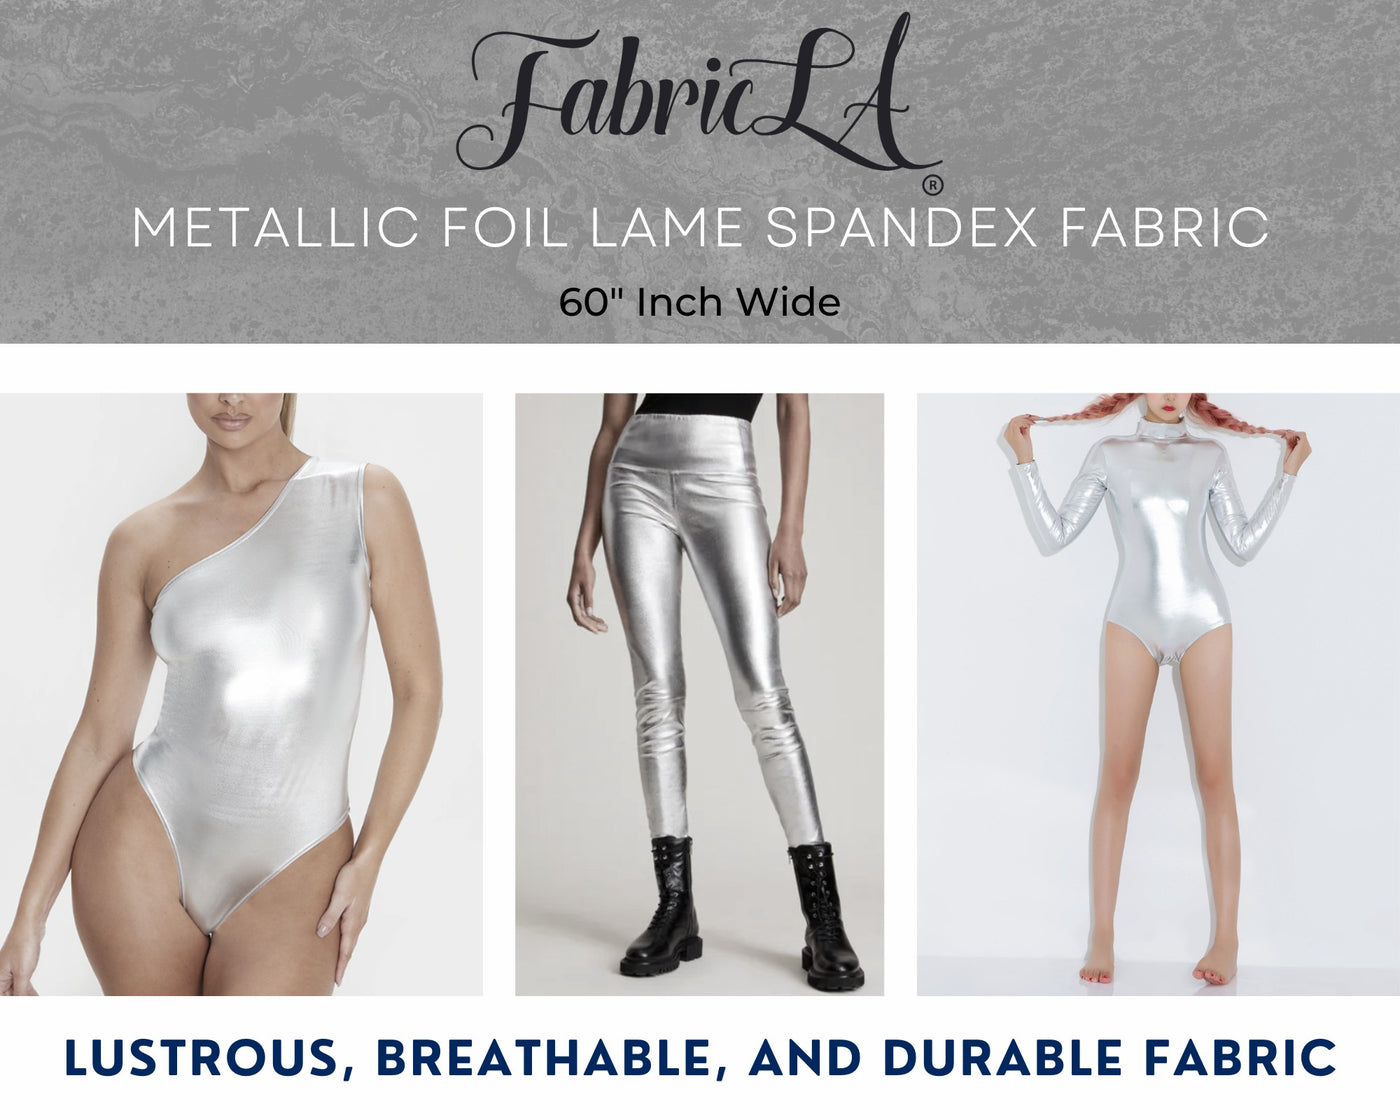 Metallic Lame Foil Spandex Knit Fabric | Silver - FabricLA.com